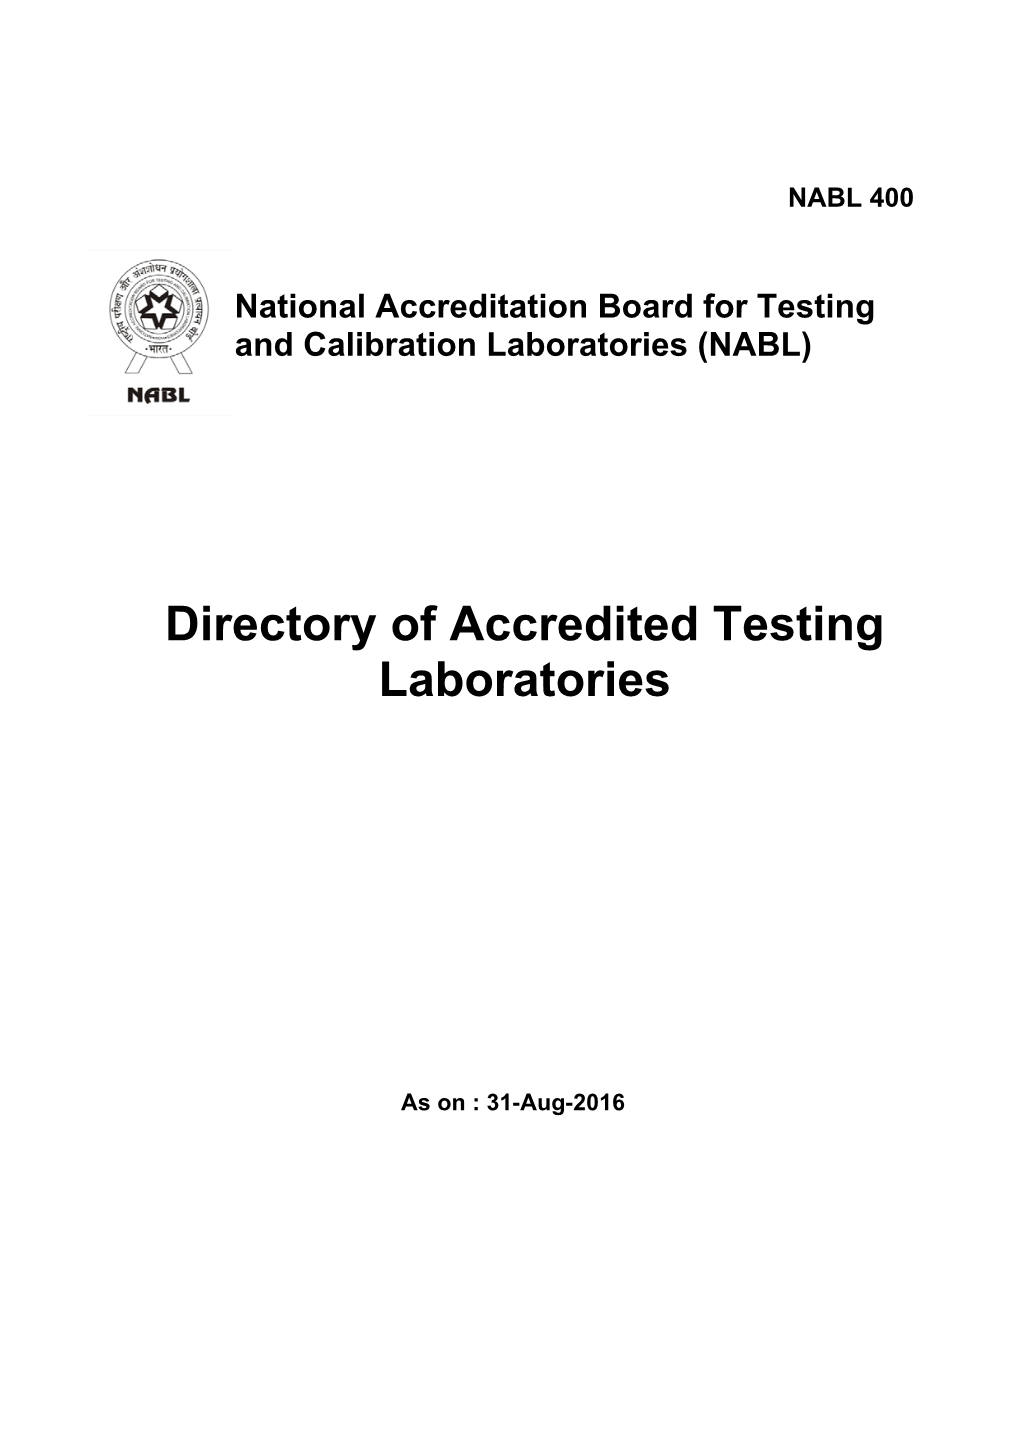 Accredited Testing Laboratories